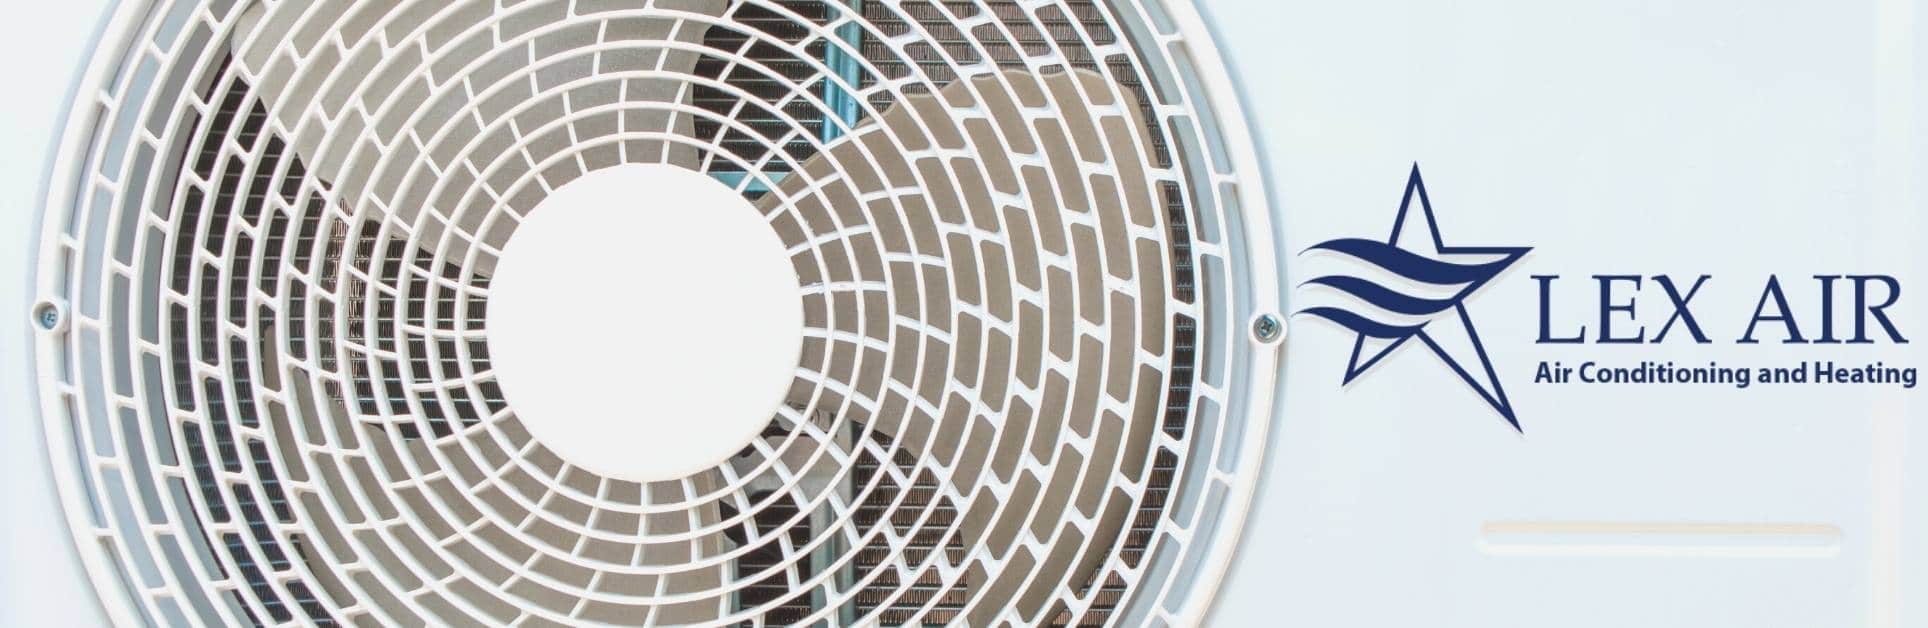 Lex Air Air conditioning and heating, Ductless Mini-Splits, Keller TX